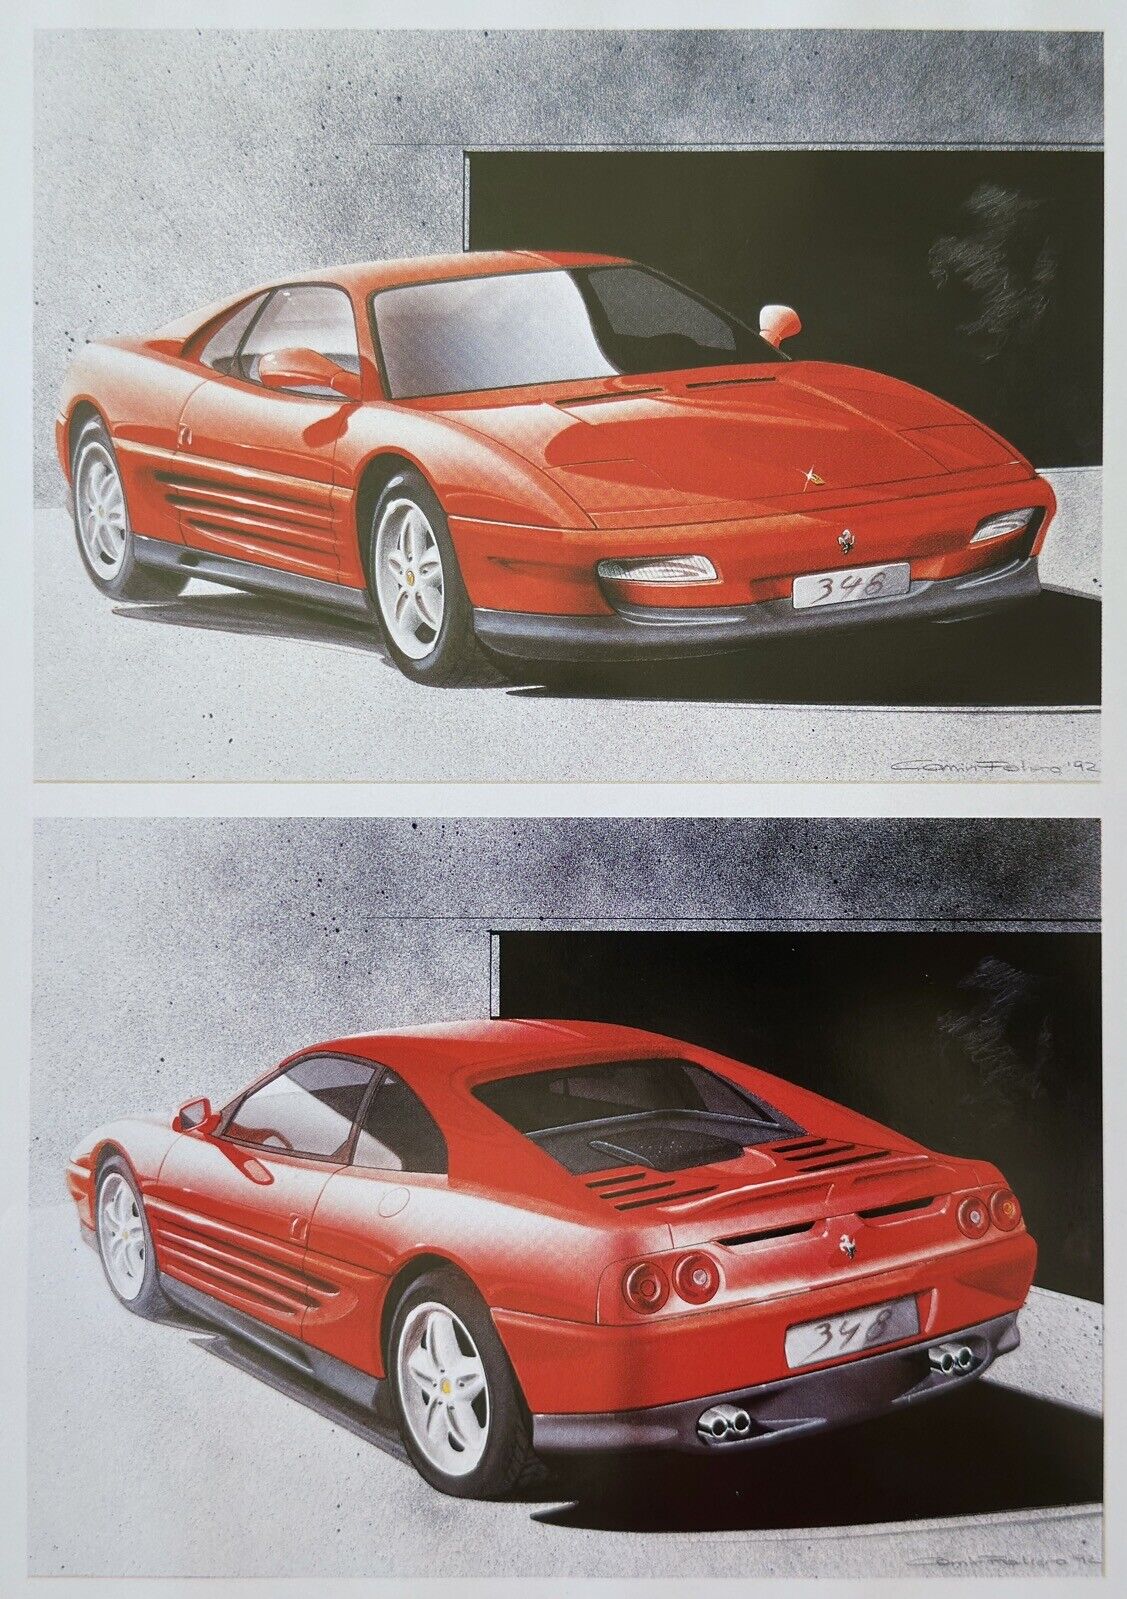 Pininfarina 1992 Ferrari F355 Design Study Rendering Art Print Comin